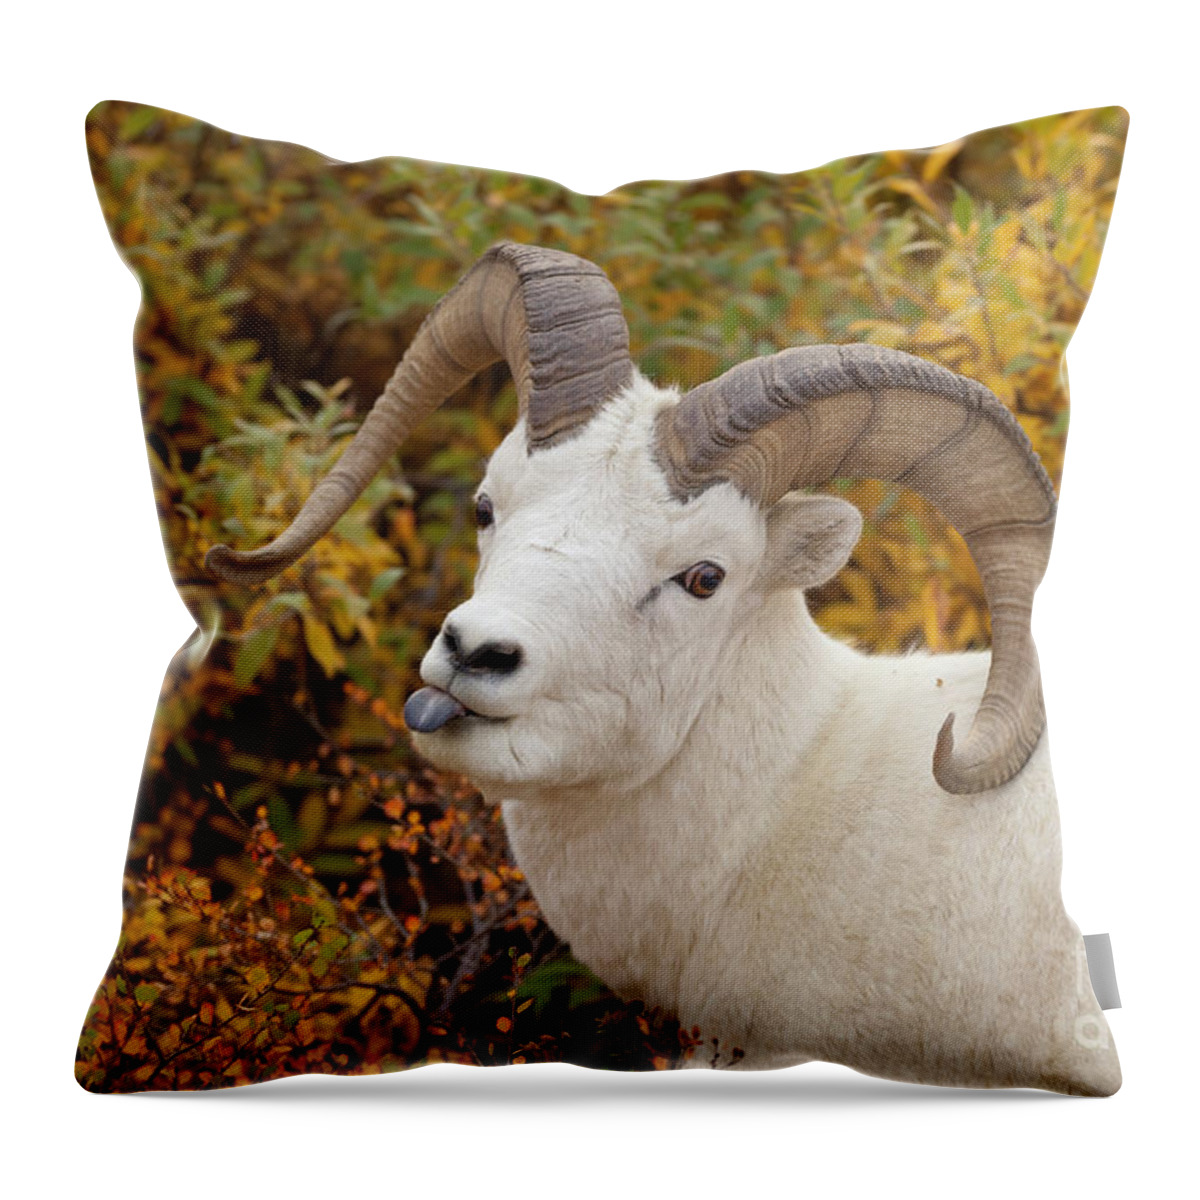 00440931 Throw Pillow featuring the photograph Dalls Sheep Ramin Denali by Yva Momatiuk John Eastcott